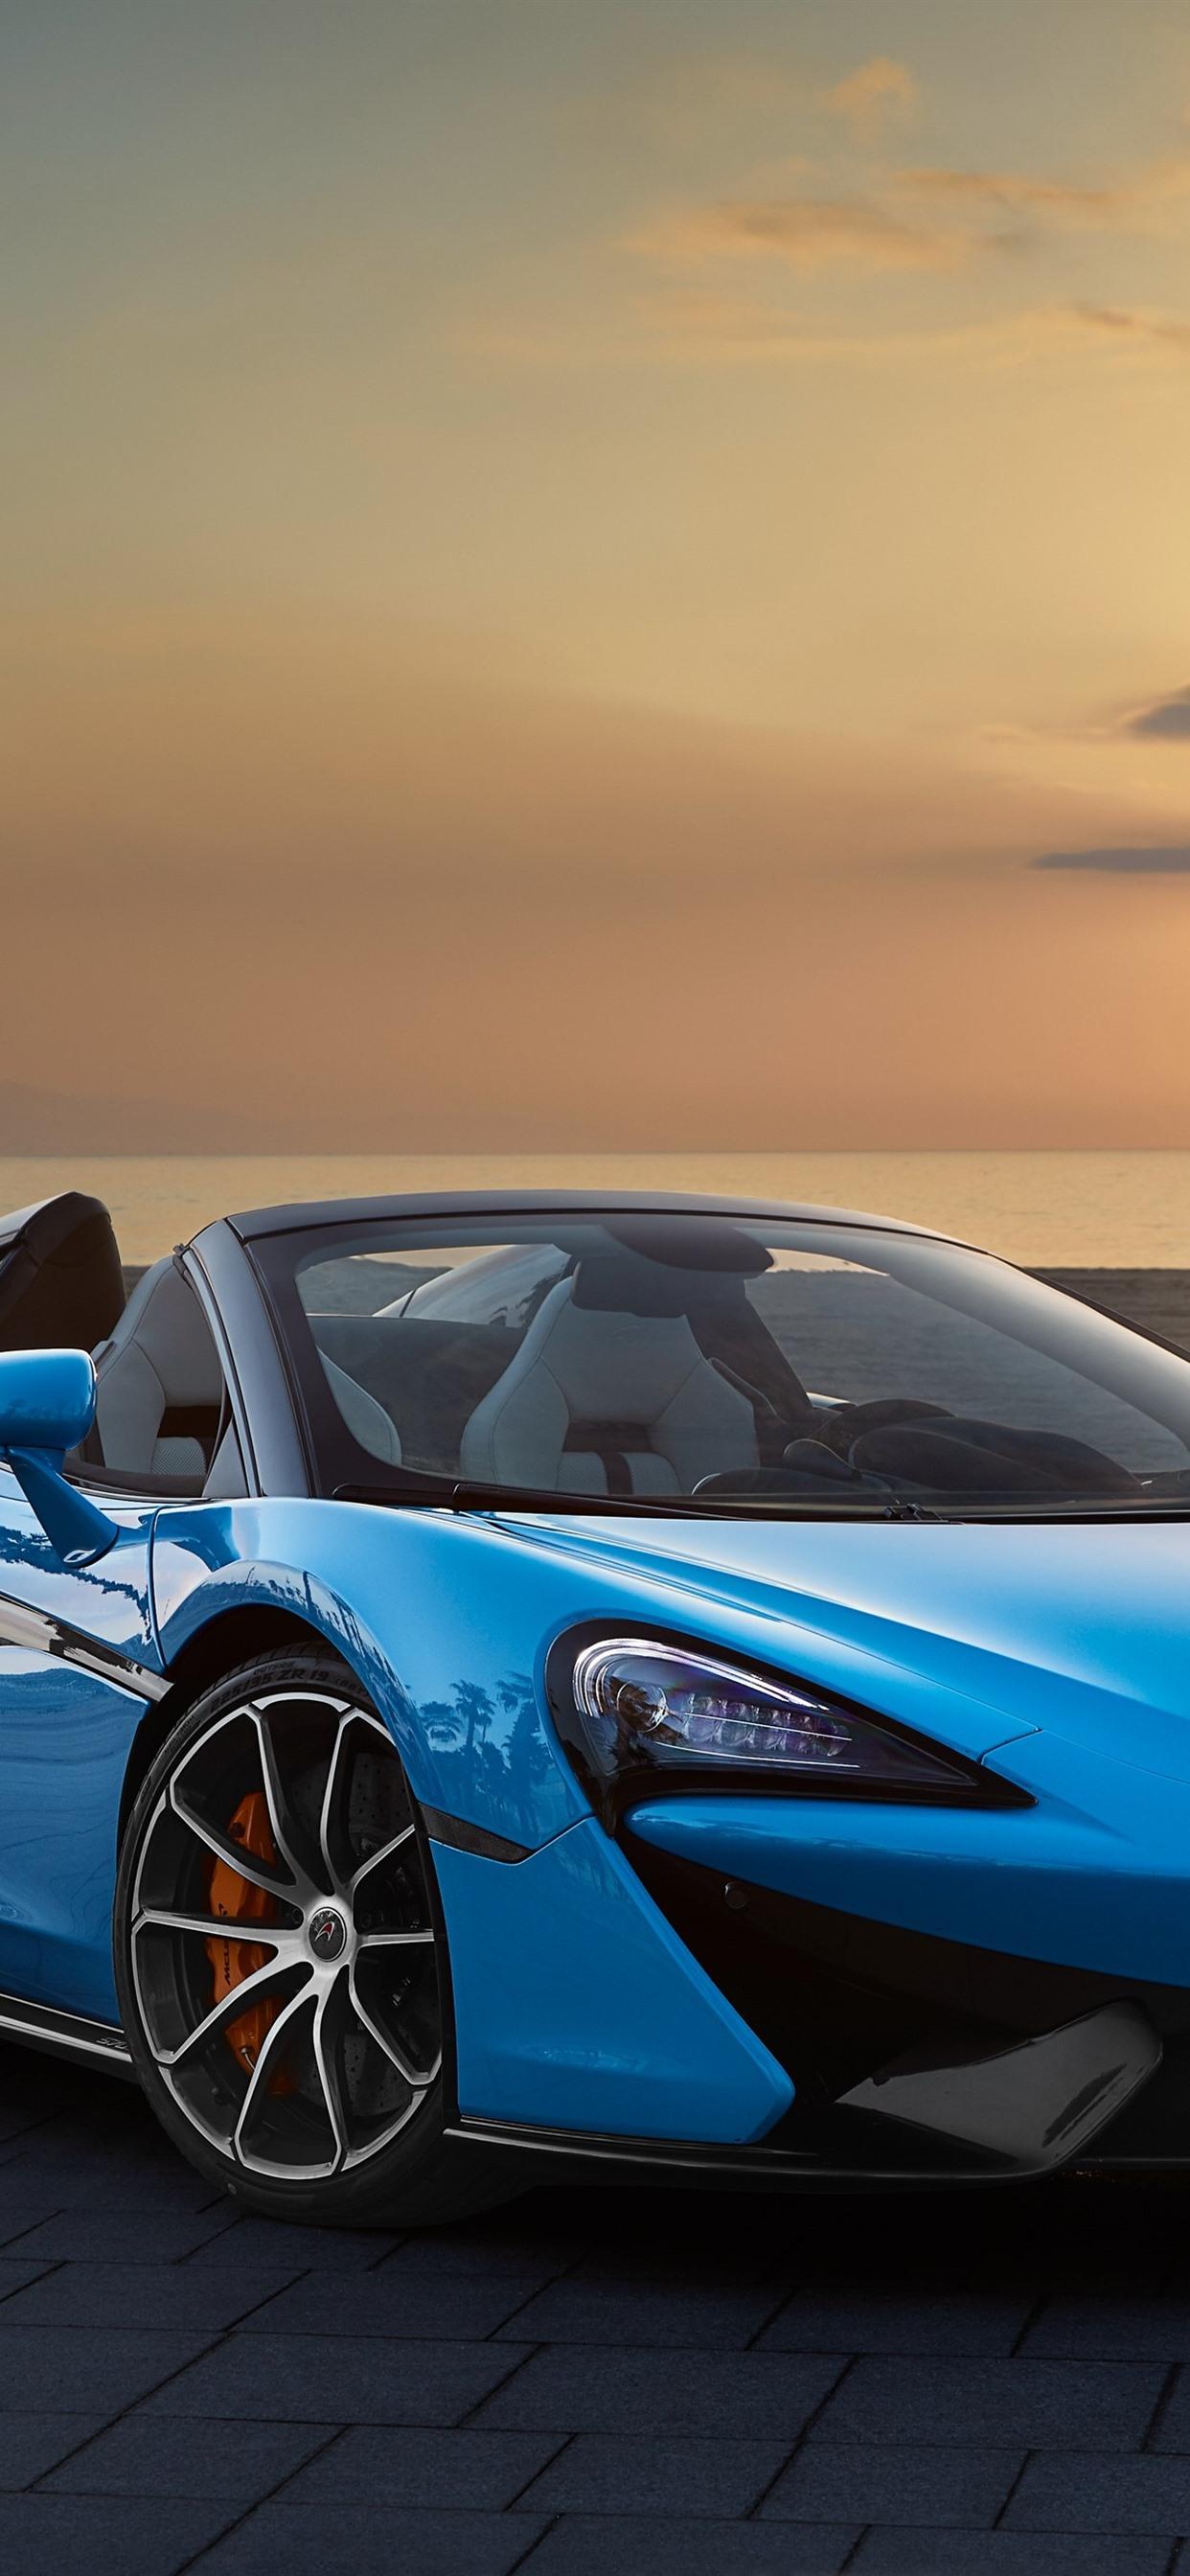 McLaren 570S blue convertible, sunset, sea 1242x2688 iPhone 11 Pro